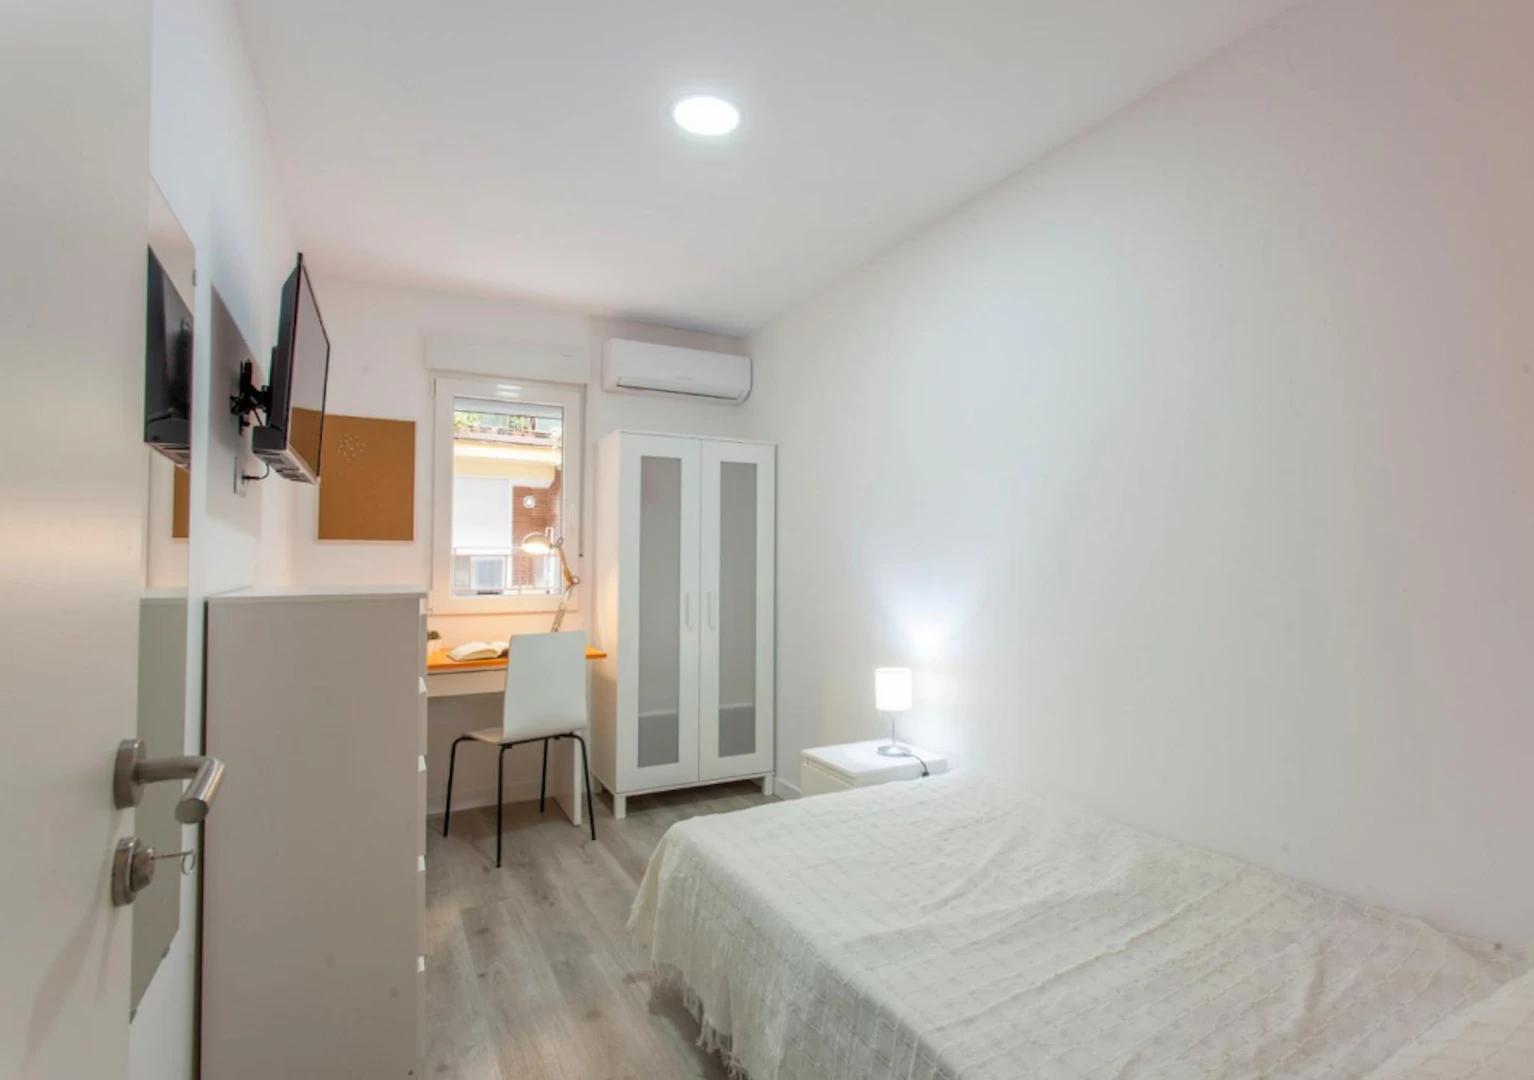 Cheap private room in Burjassot